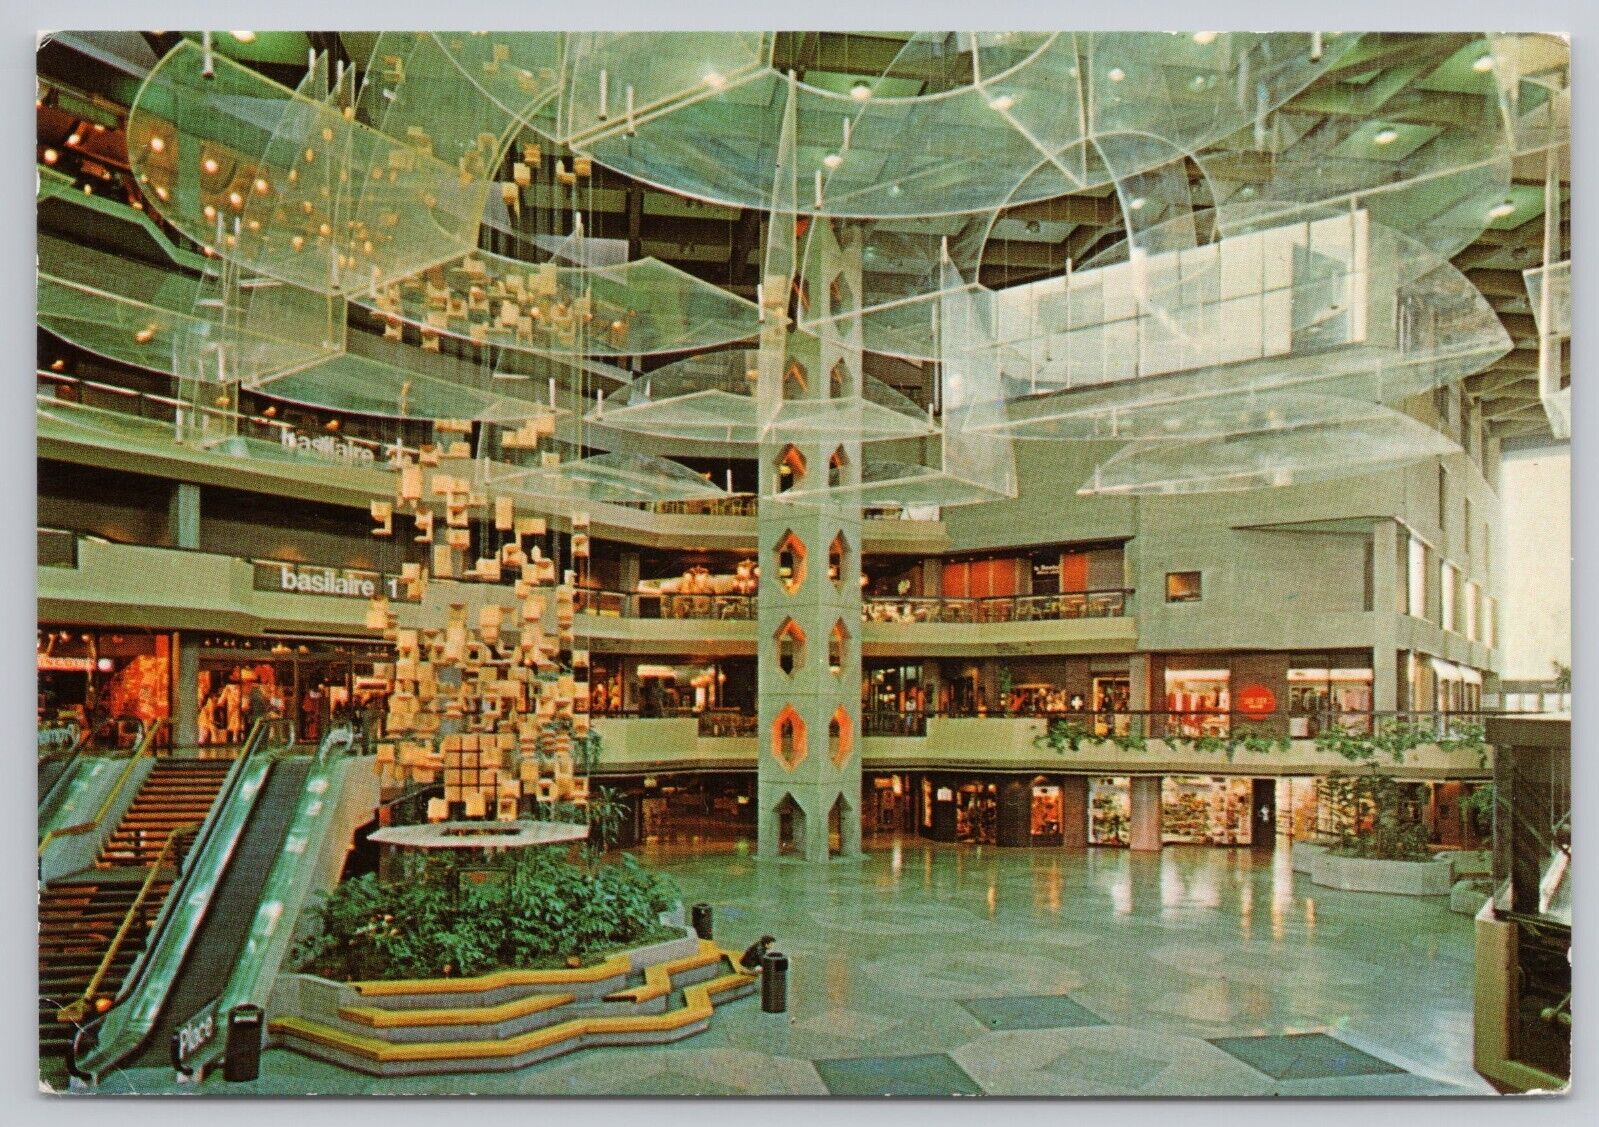 Montreal Quebec Canada, Complexe Desjardins Mall Atrium, Vintage Postcard